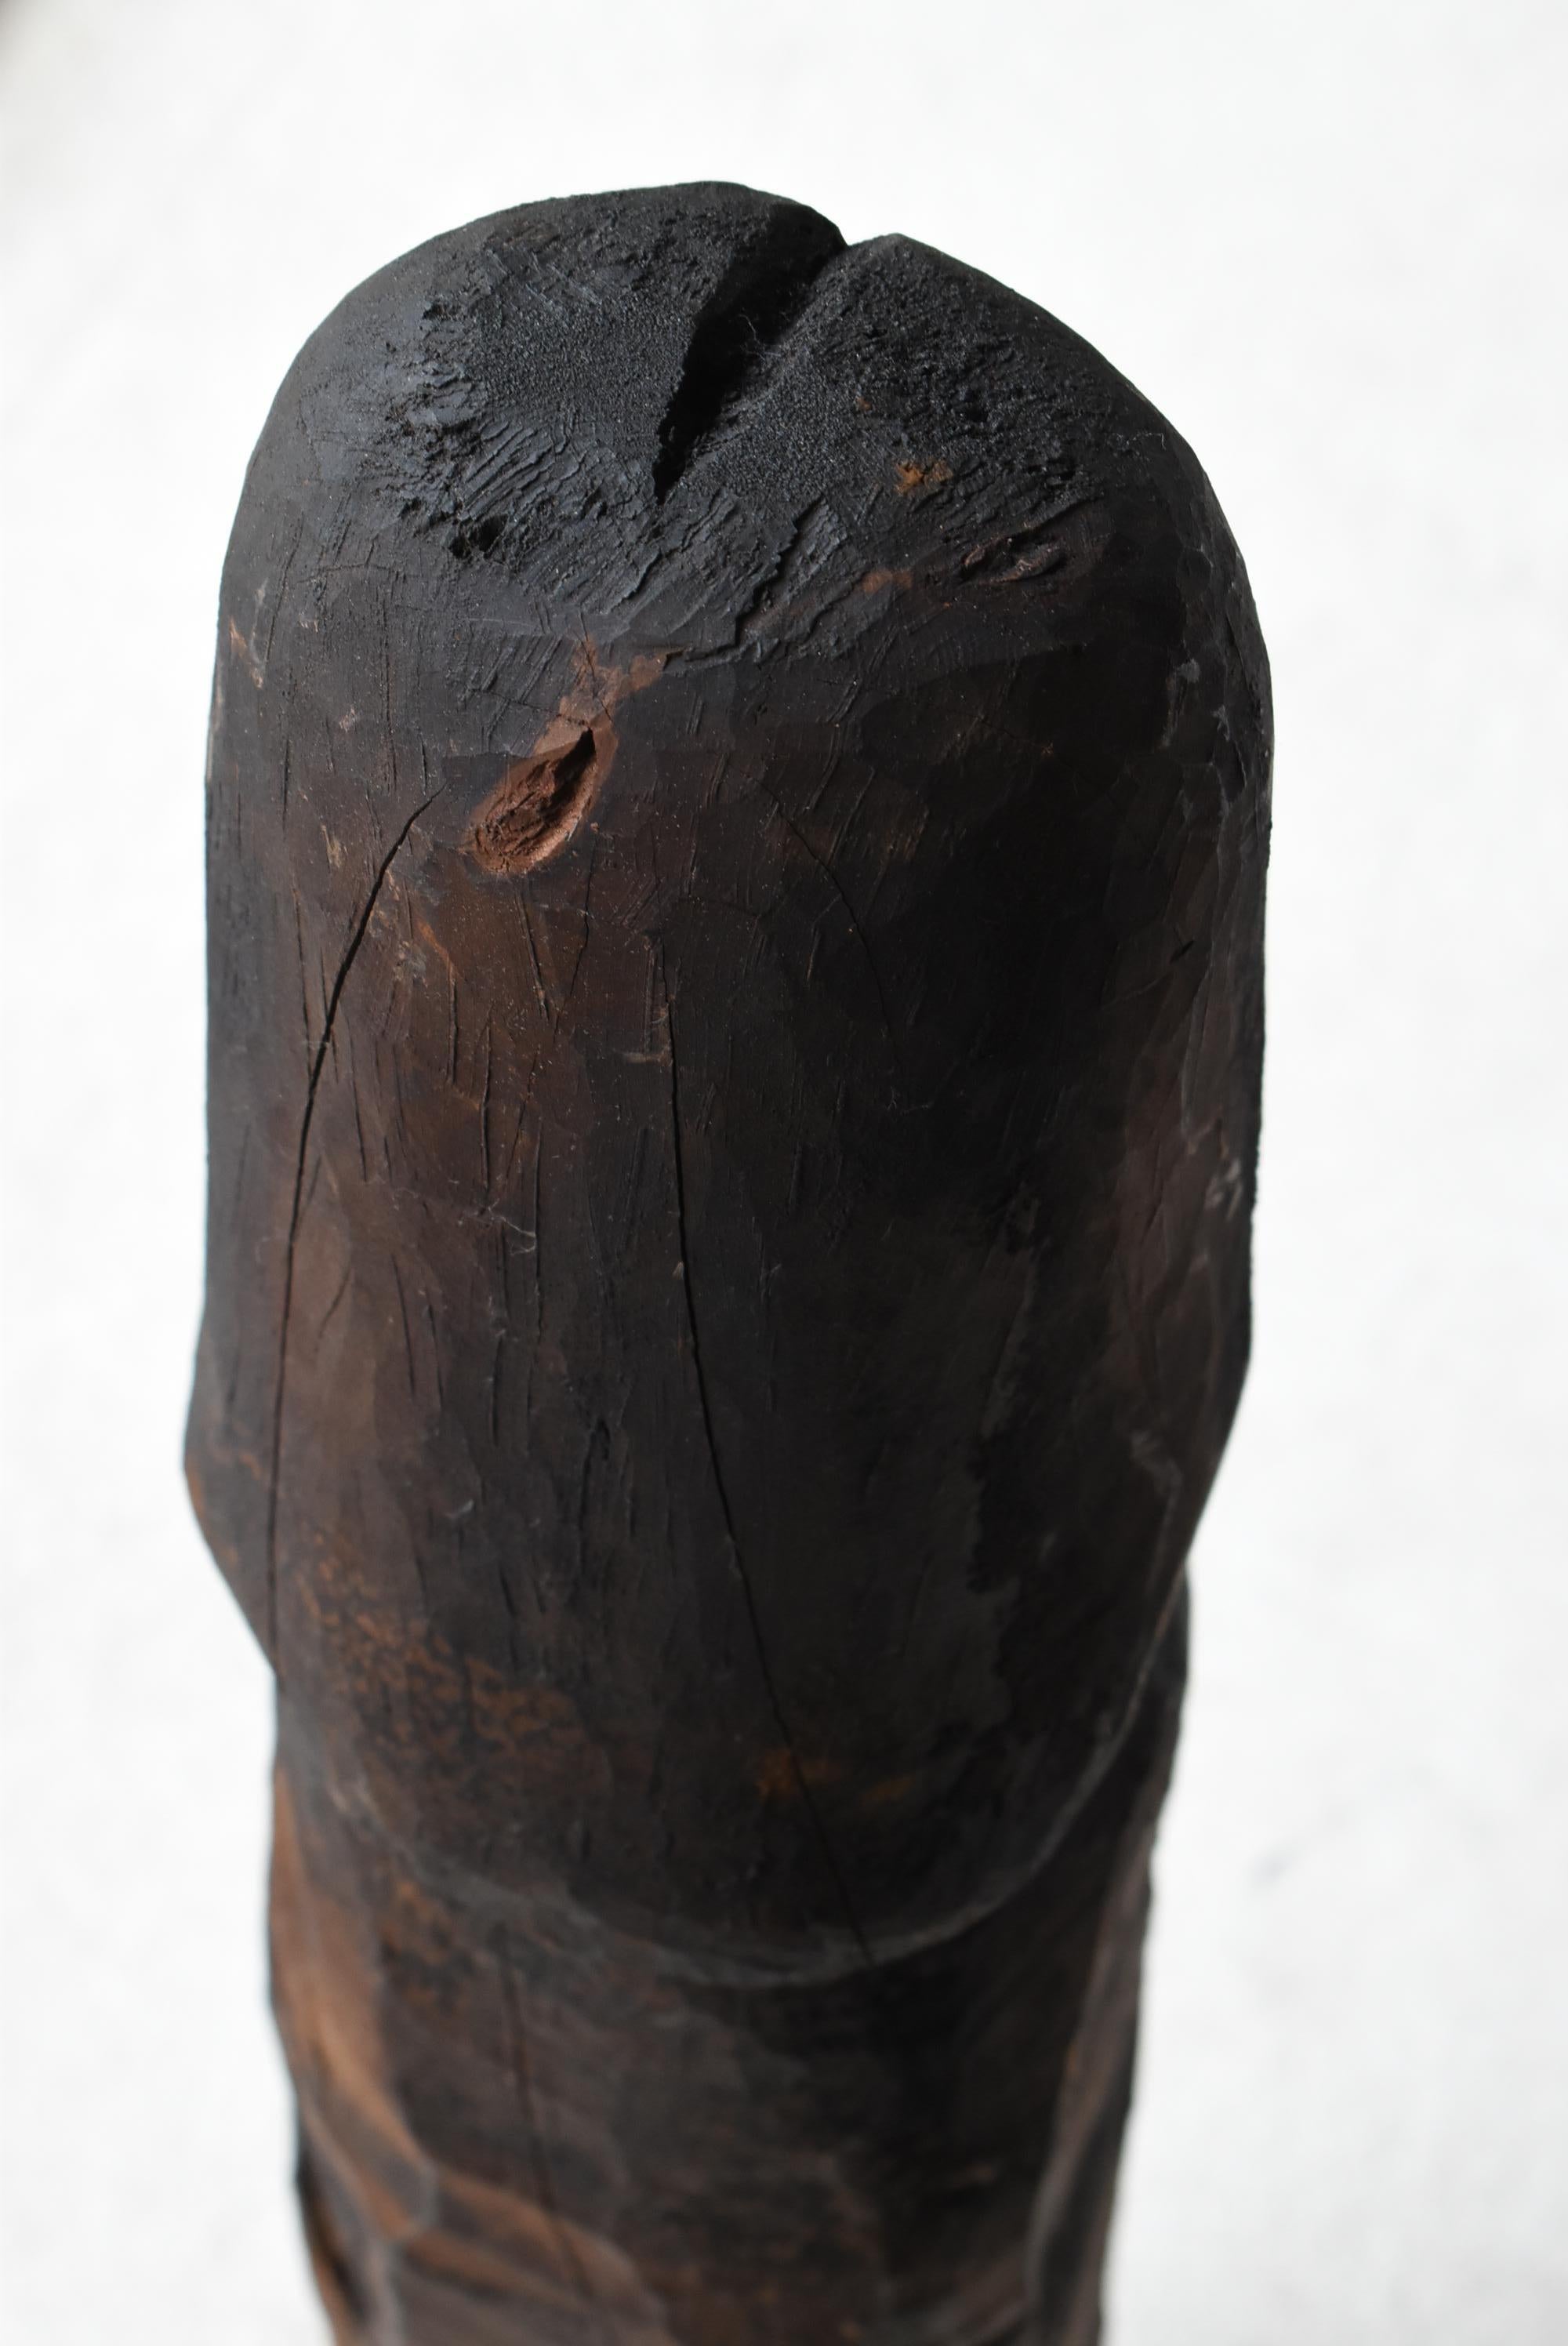 19th Century Japanese Antique Wood Carving Penis 1800s-1860s / Figurine Wabi Sabi Mingei